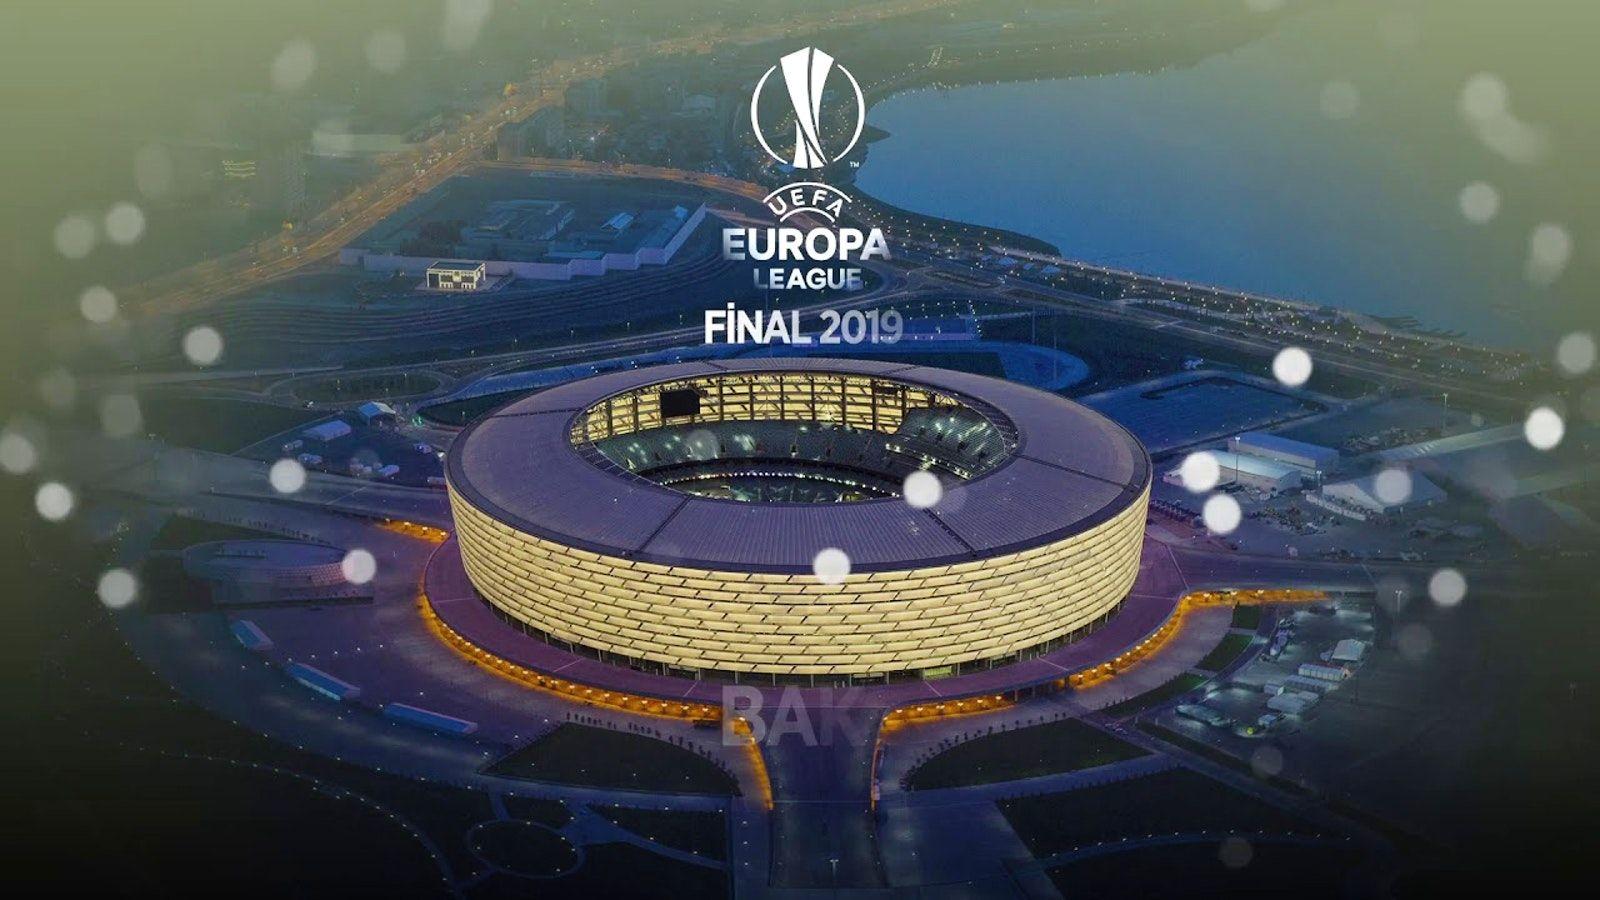 UEFA Europa League 2018 19 Final Match Stadium And New Design